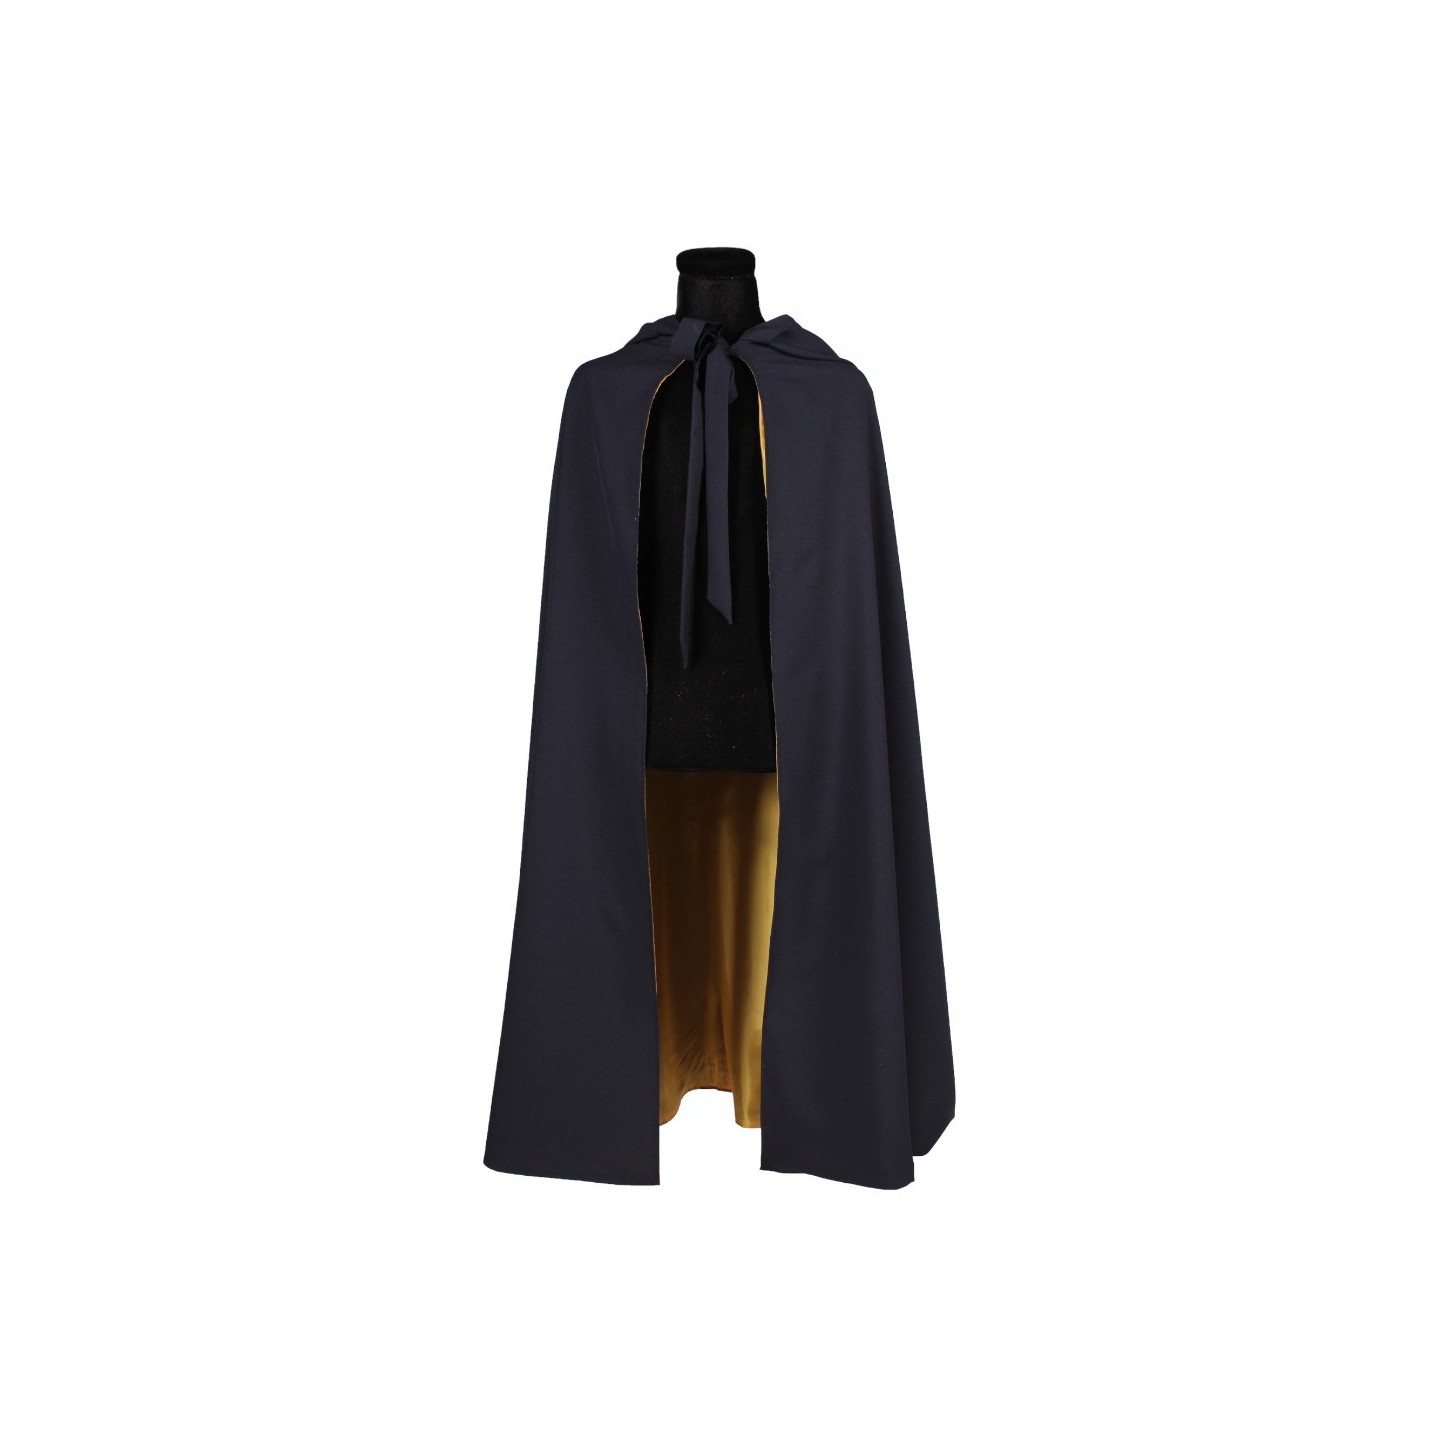 zwarte cape met kap capuchon mantel